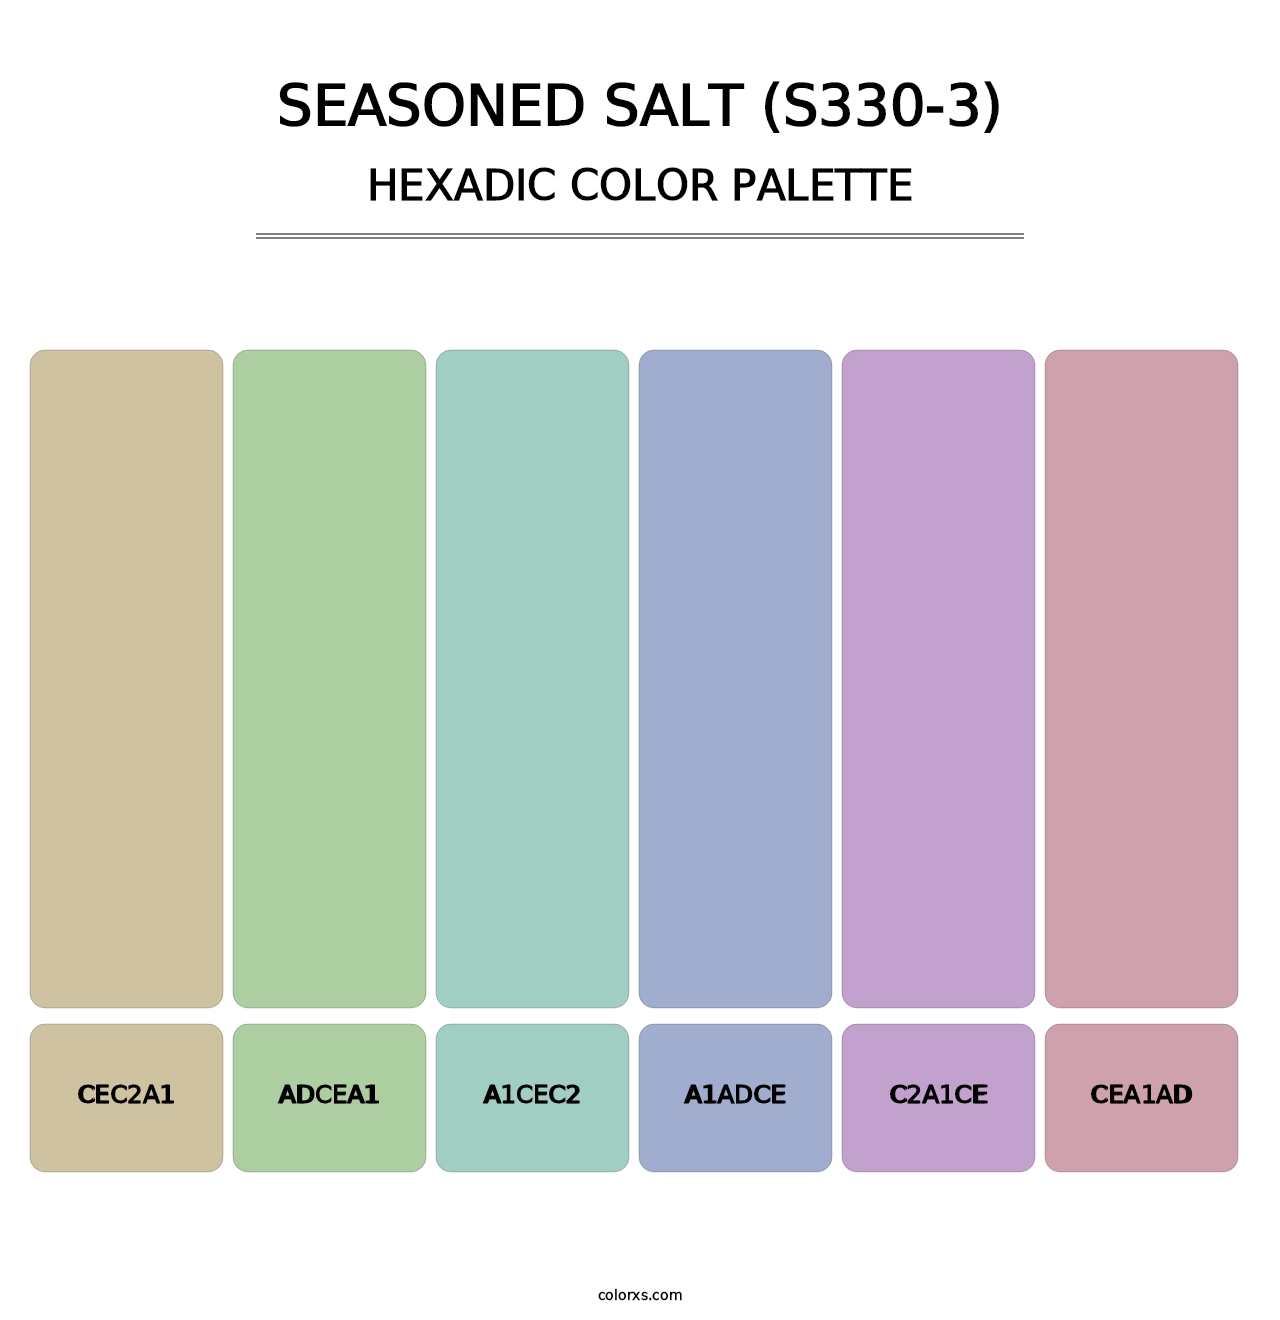 Seasoned Salt (S330-3) - Hexadic Color Palette